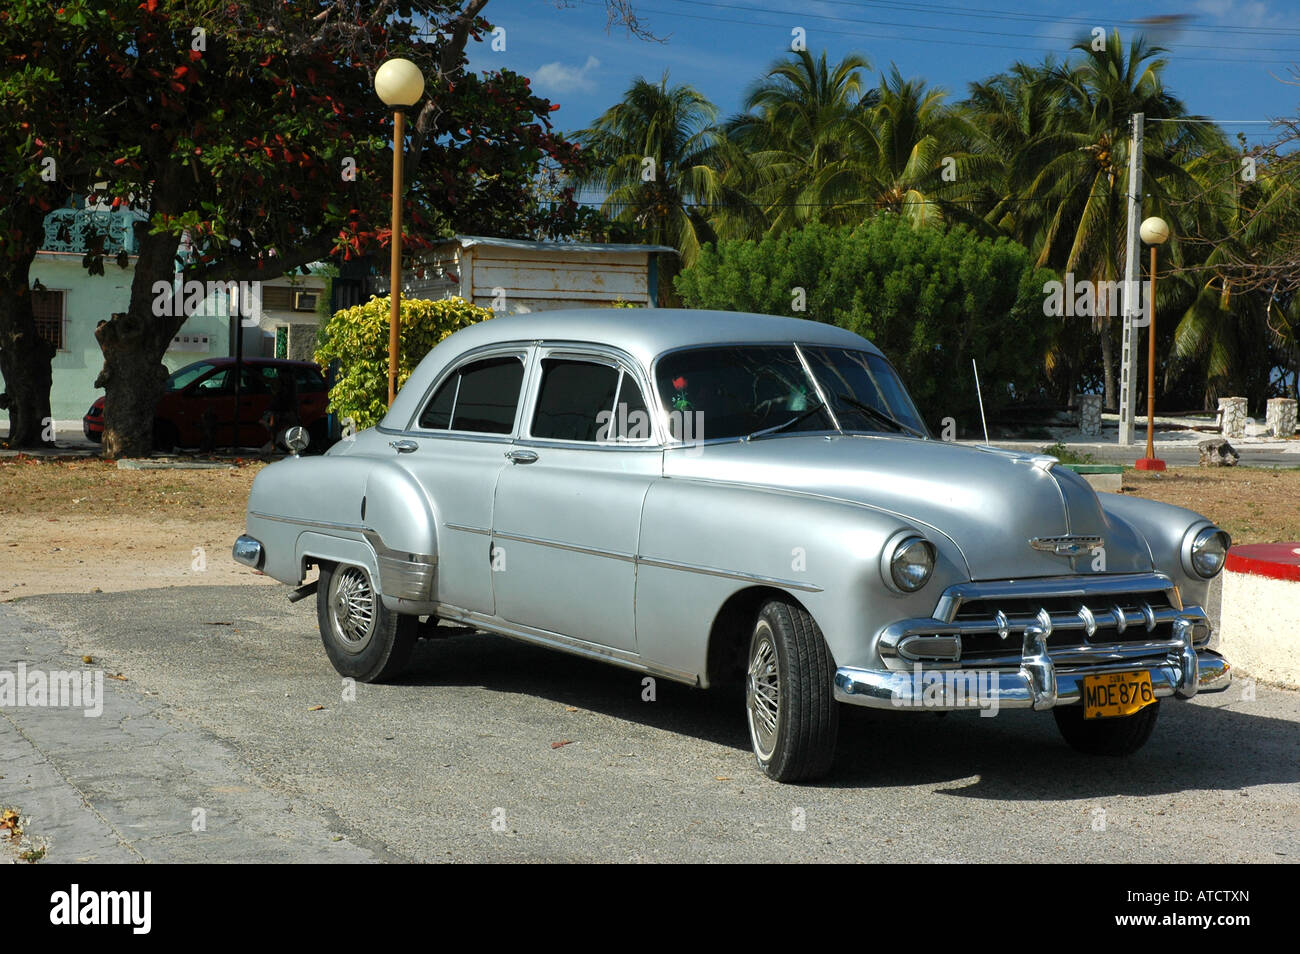 Alte 50er Jahre amerikanische Chevrolet Automobile in Varadero Kuba Stockfoto